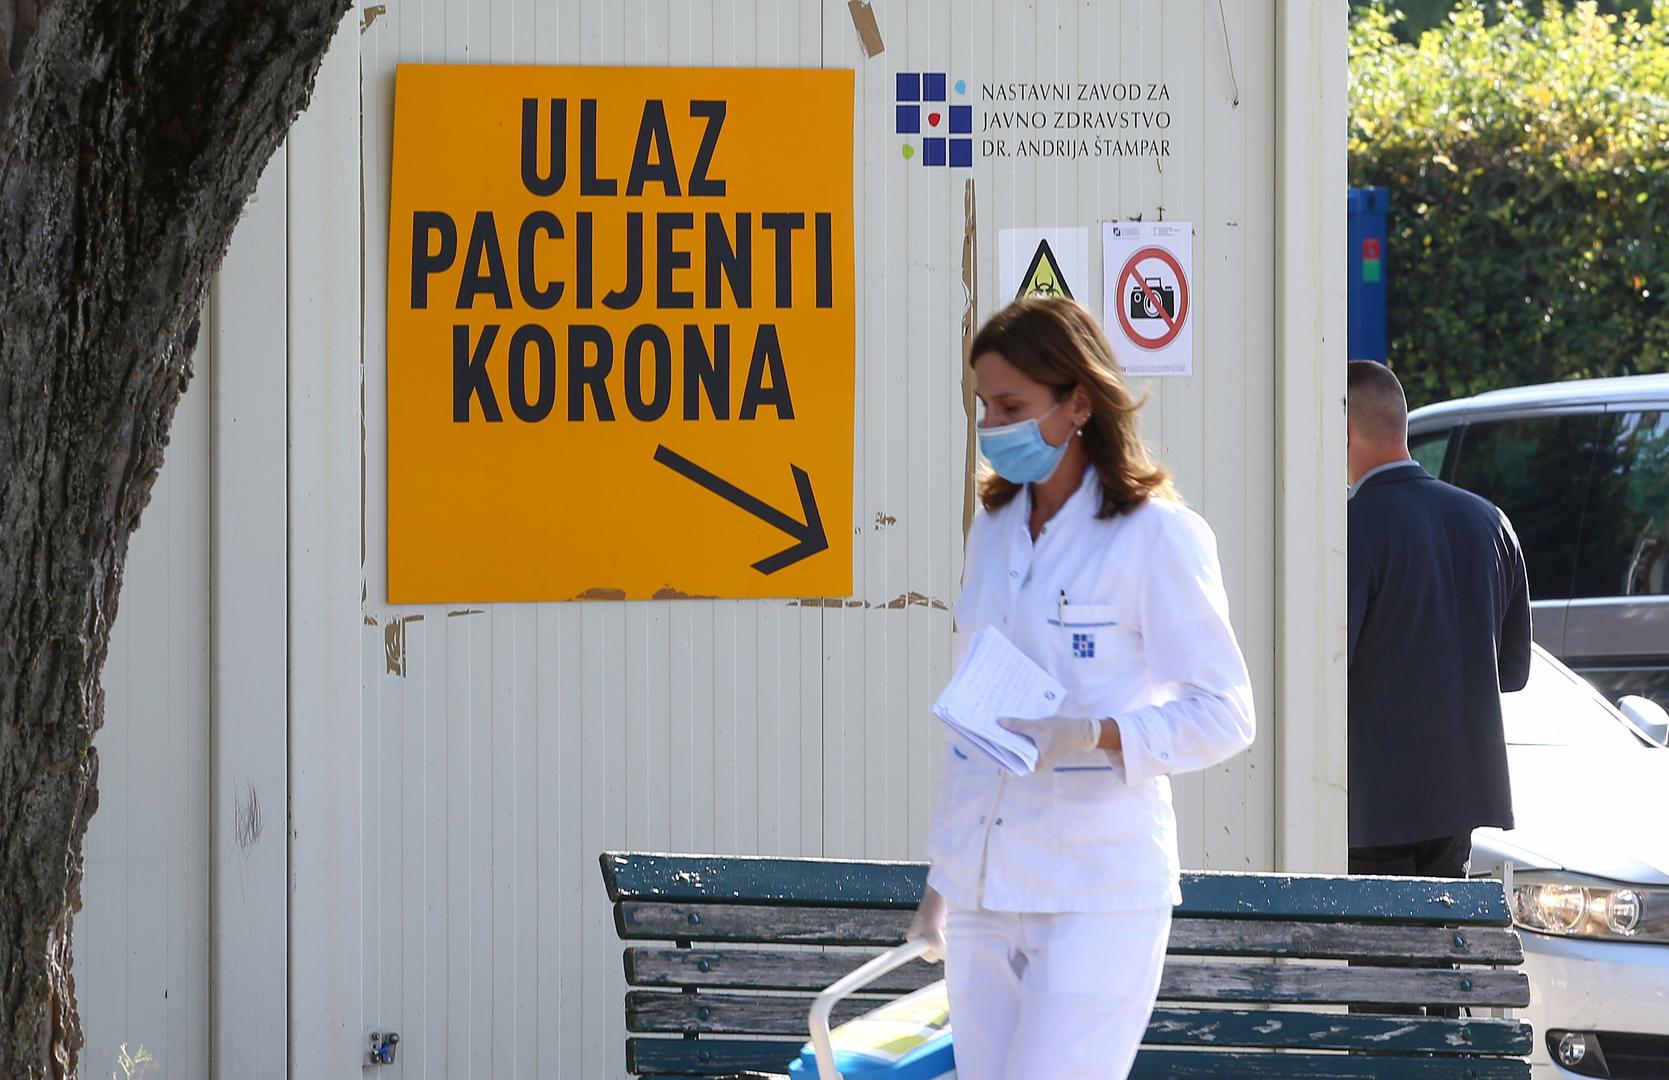 09.10.2020., Zagreb - Drive-in testiranje na koronavirus u Nastavnom zavodu za javno zdravstvo Andrija Stampar.
Photo: Matija Habljak/PIXSELL